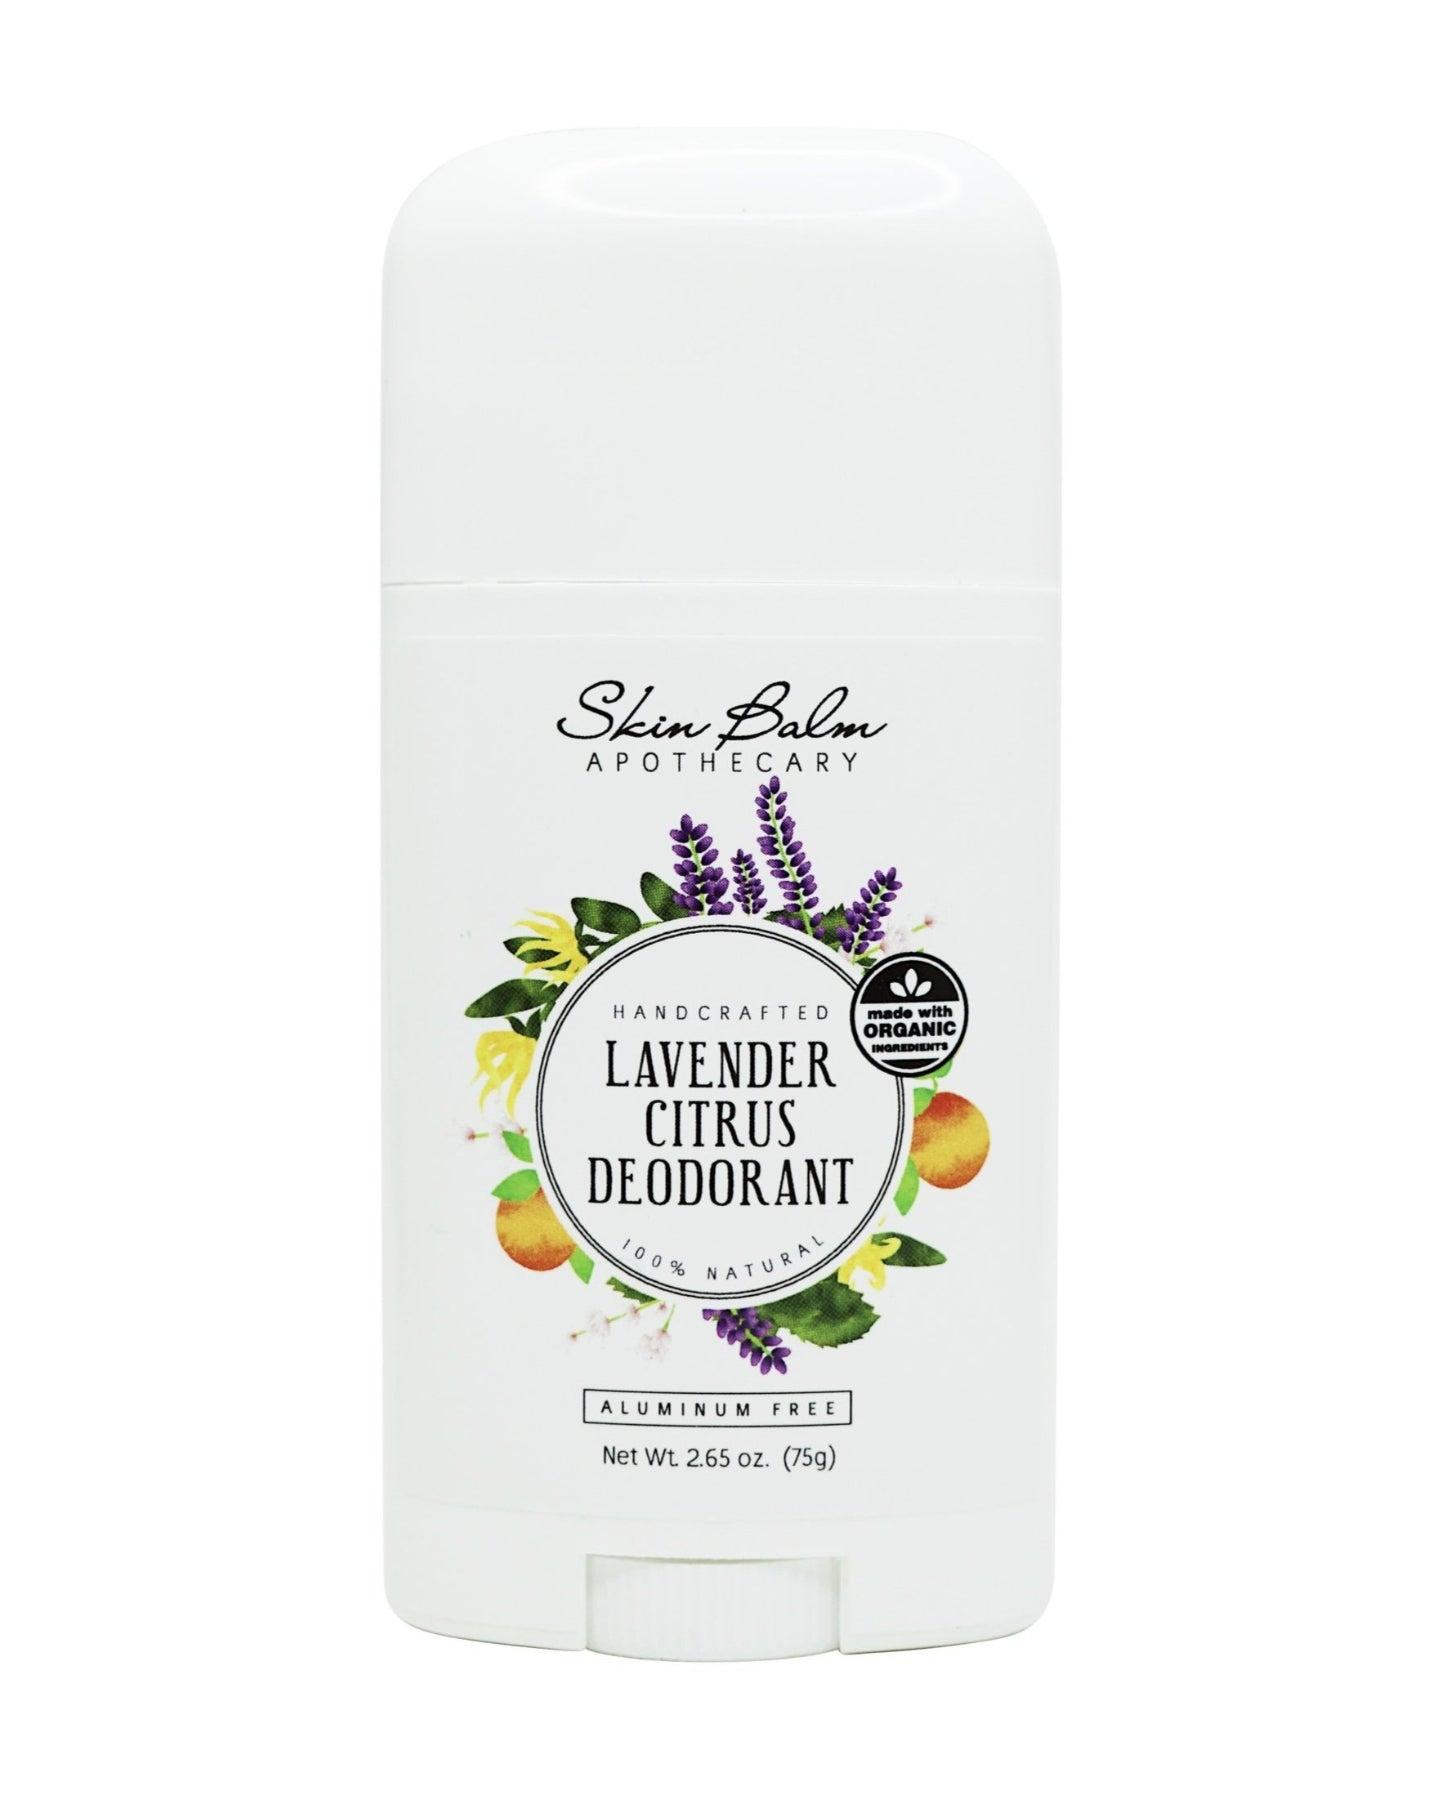 Lavender Citrus Deodorant against a white background.